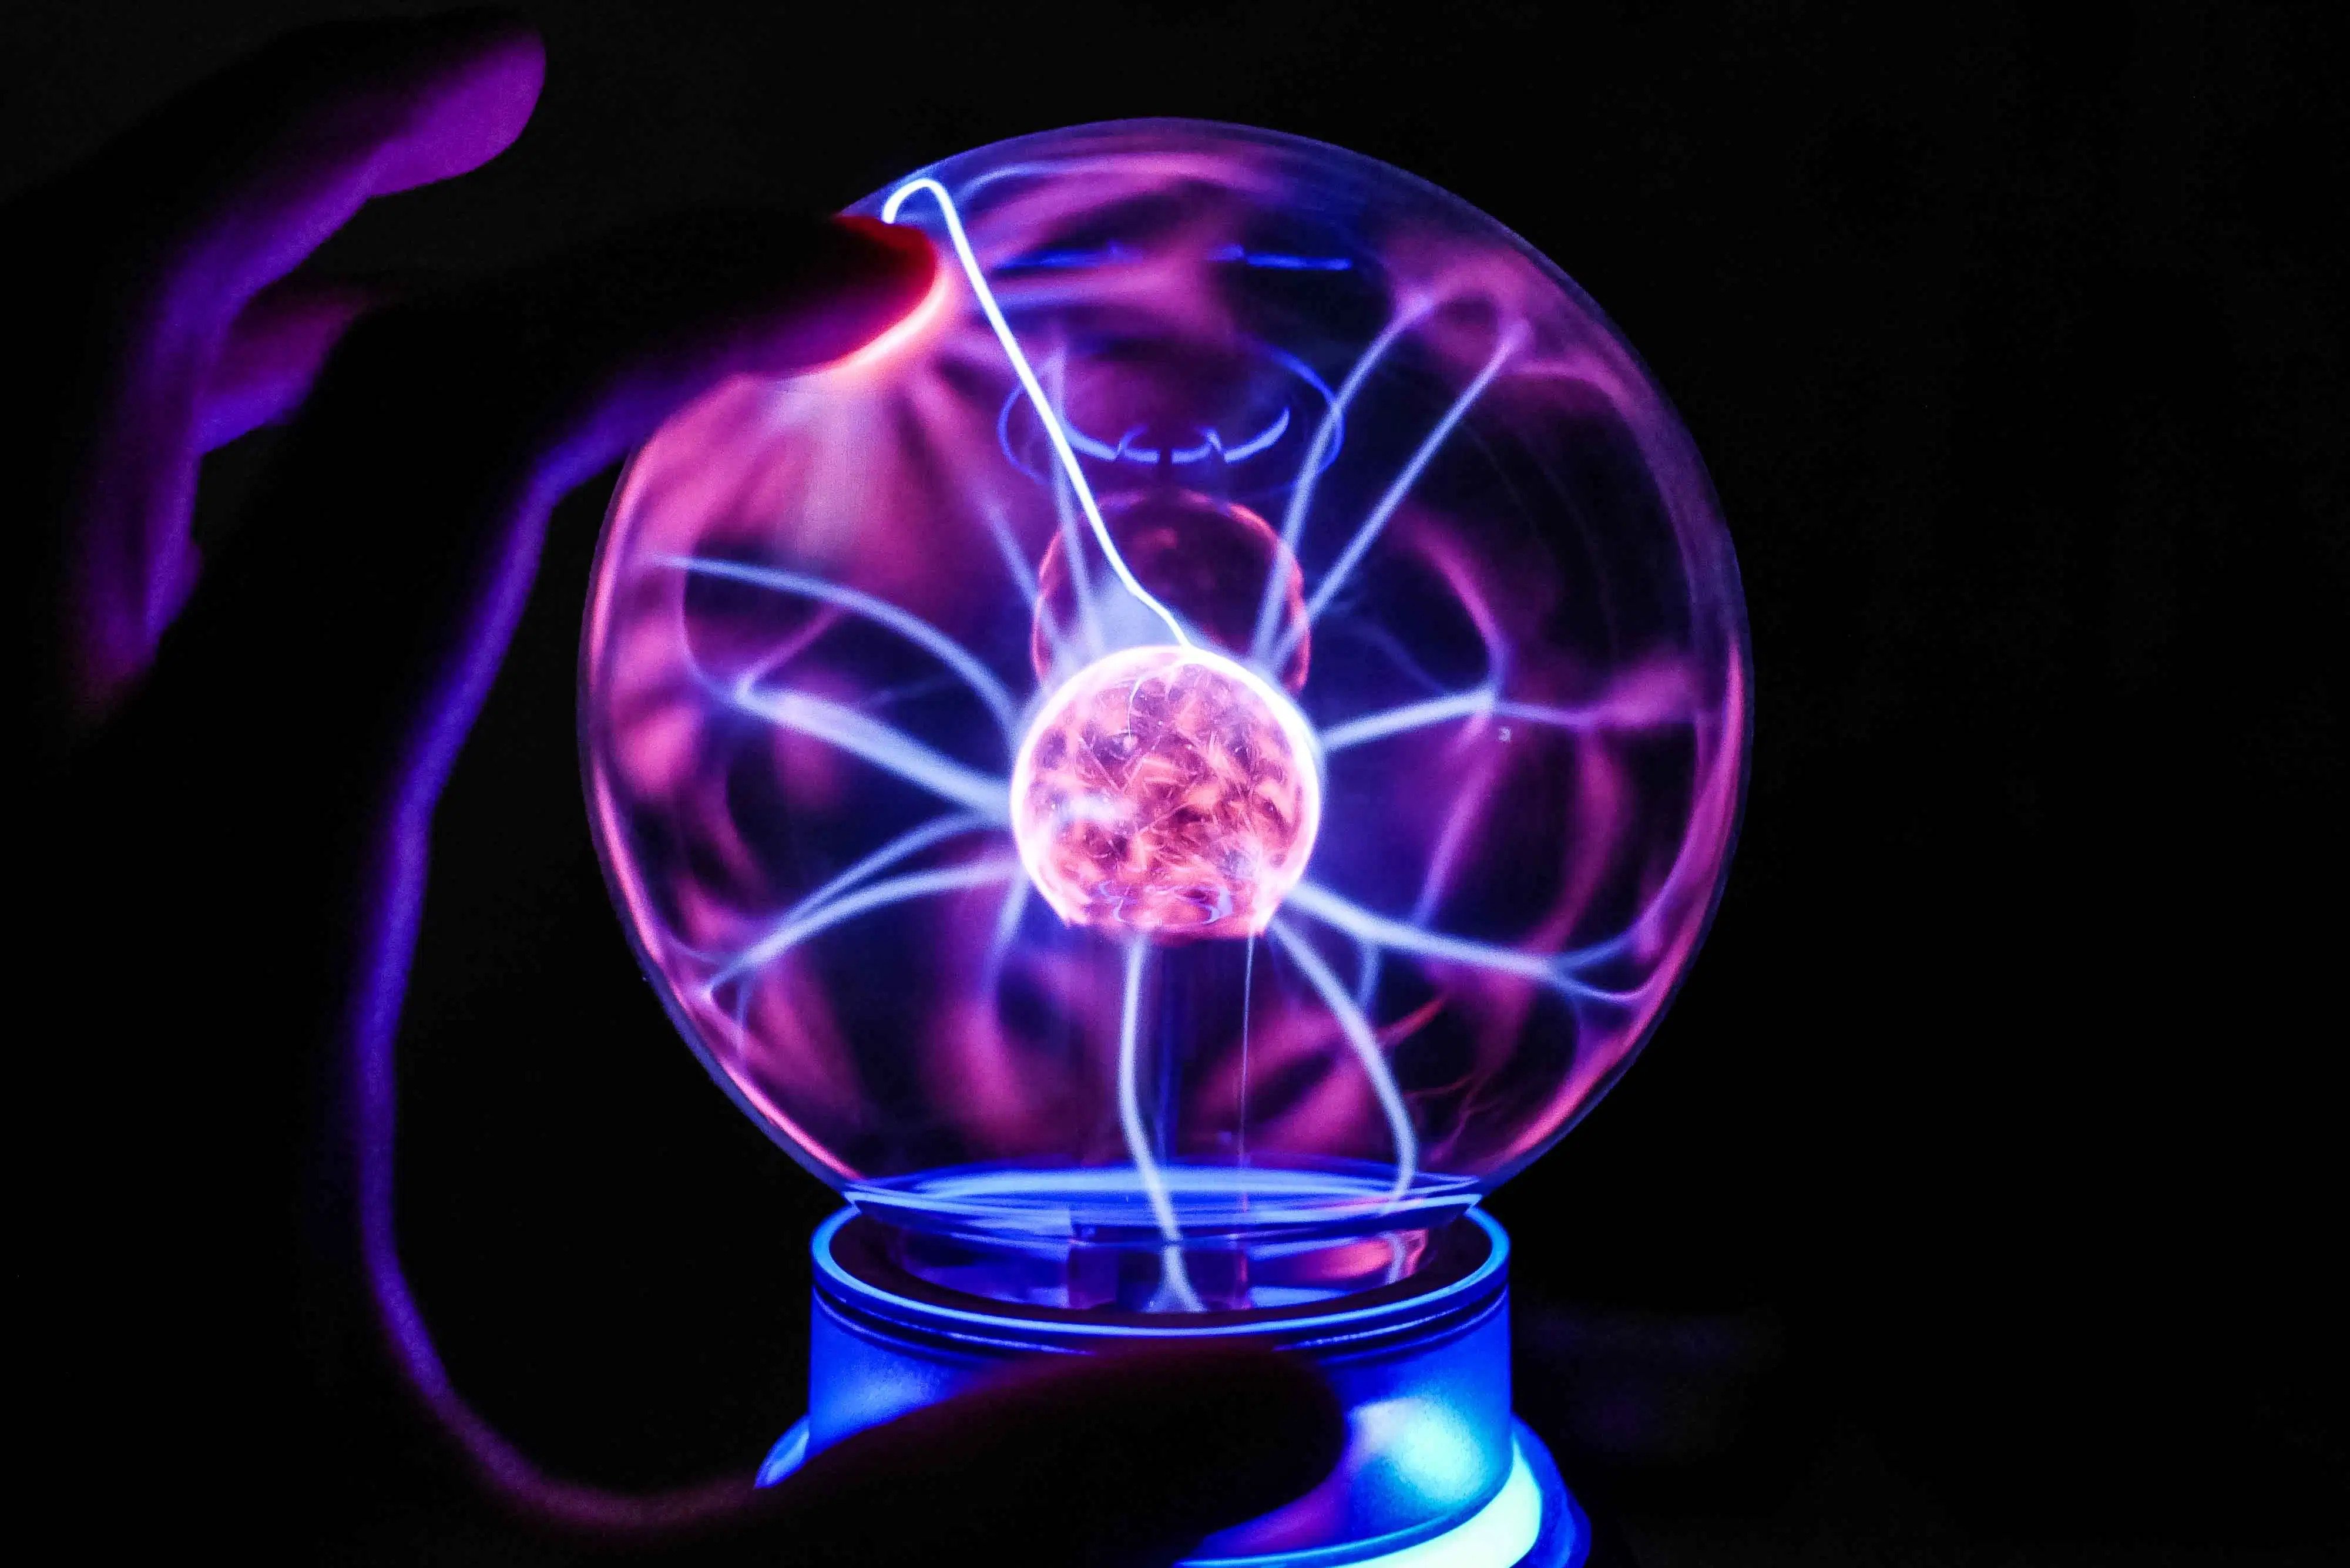 Blue and pink plasma in a glass plasma globe